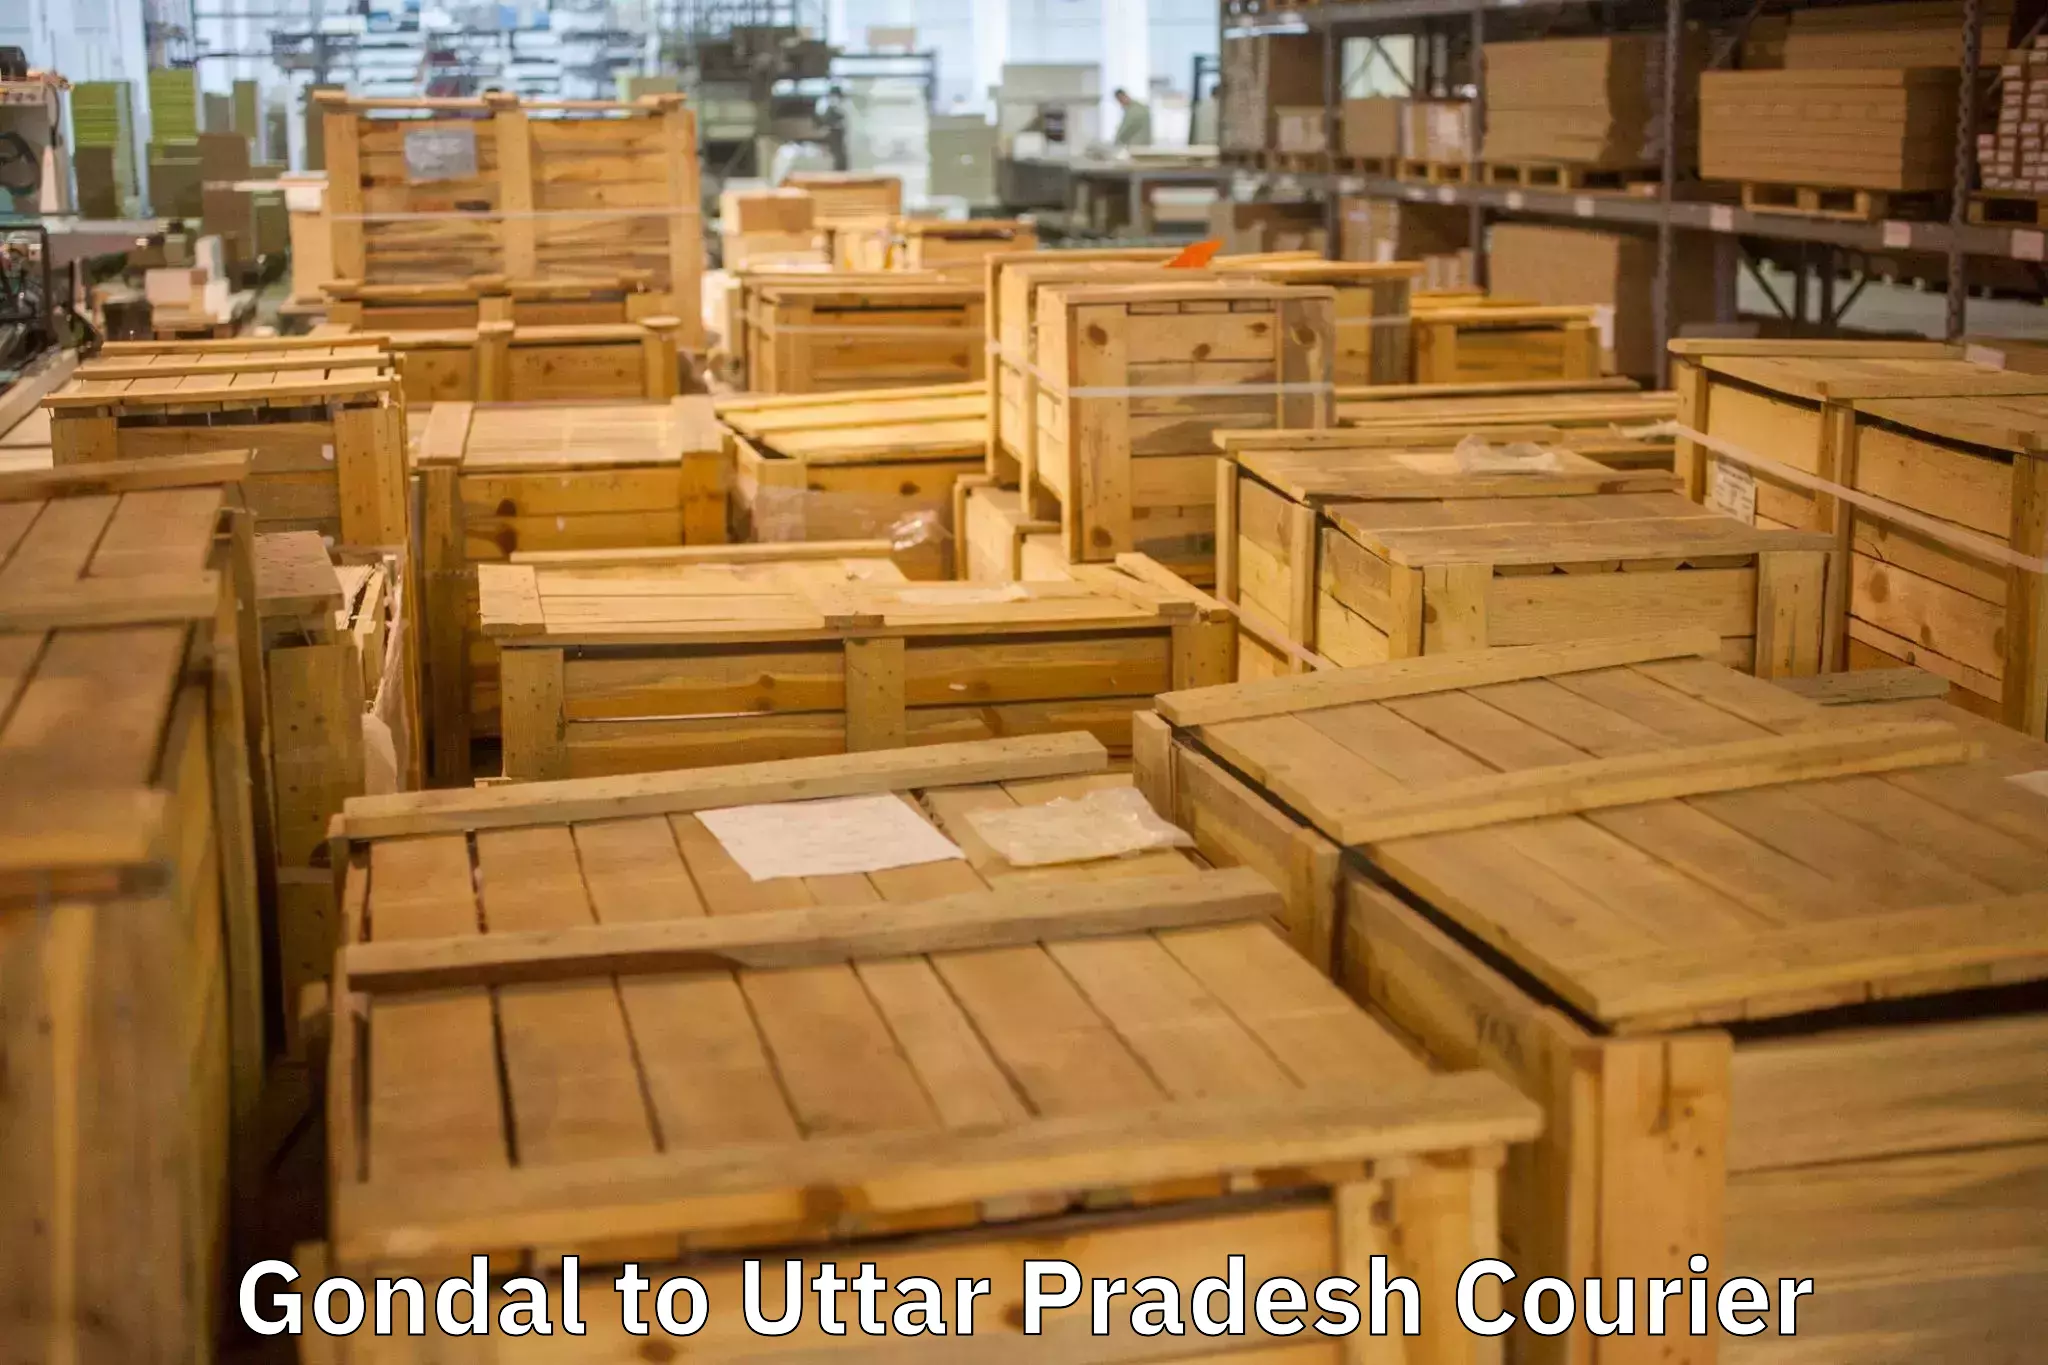 Quality moving company Gondal to Vrindavan